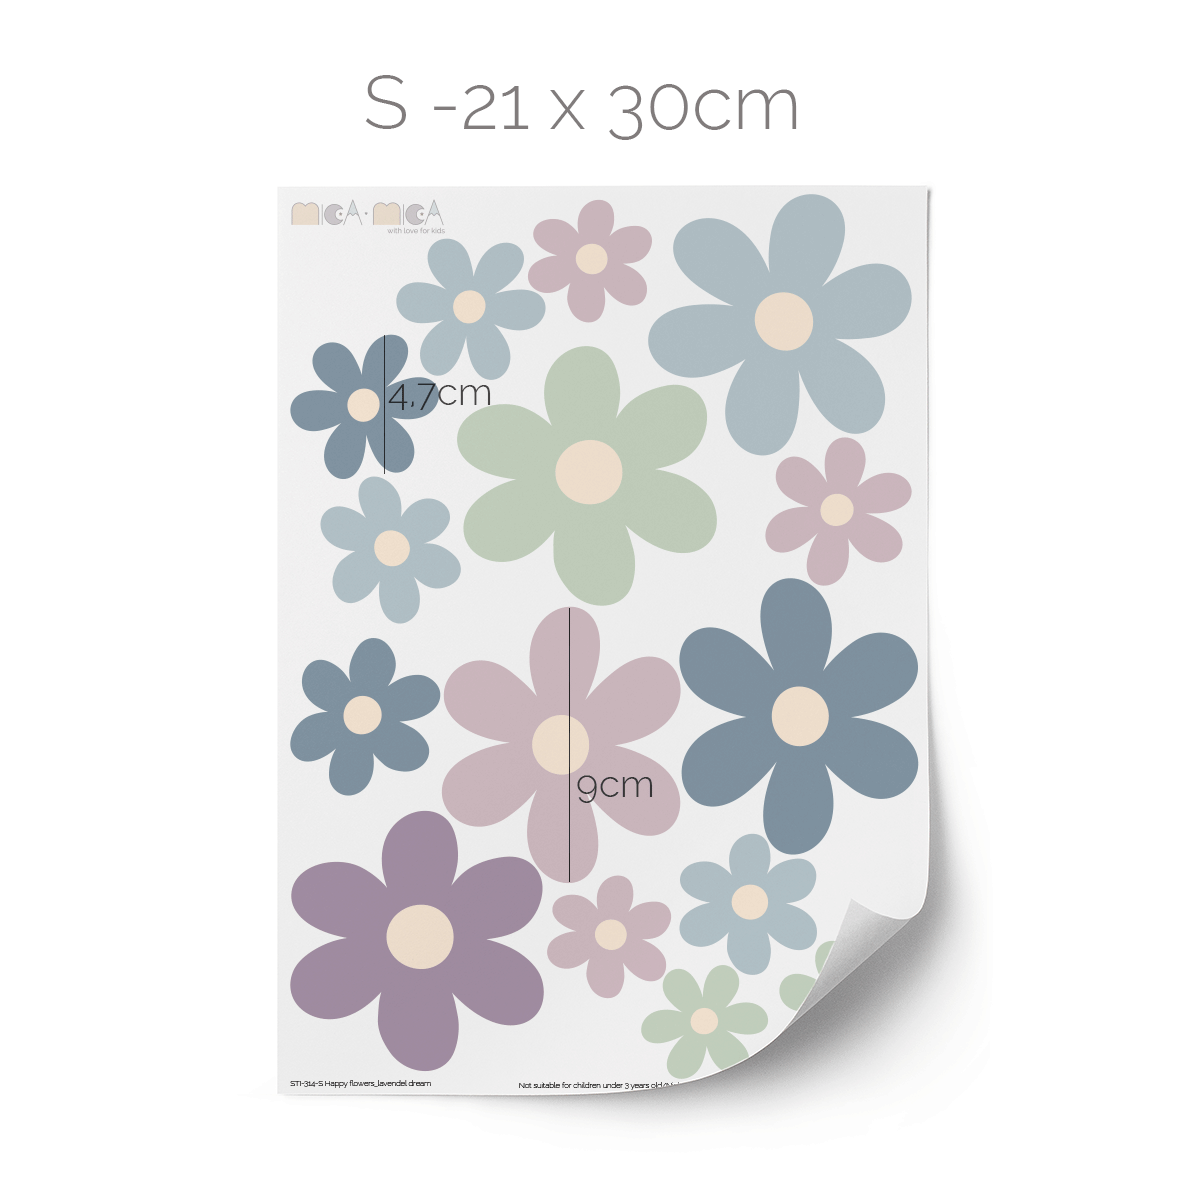 Flower wall stickers - Happy blooms (lavendel dream)